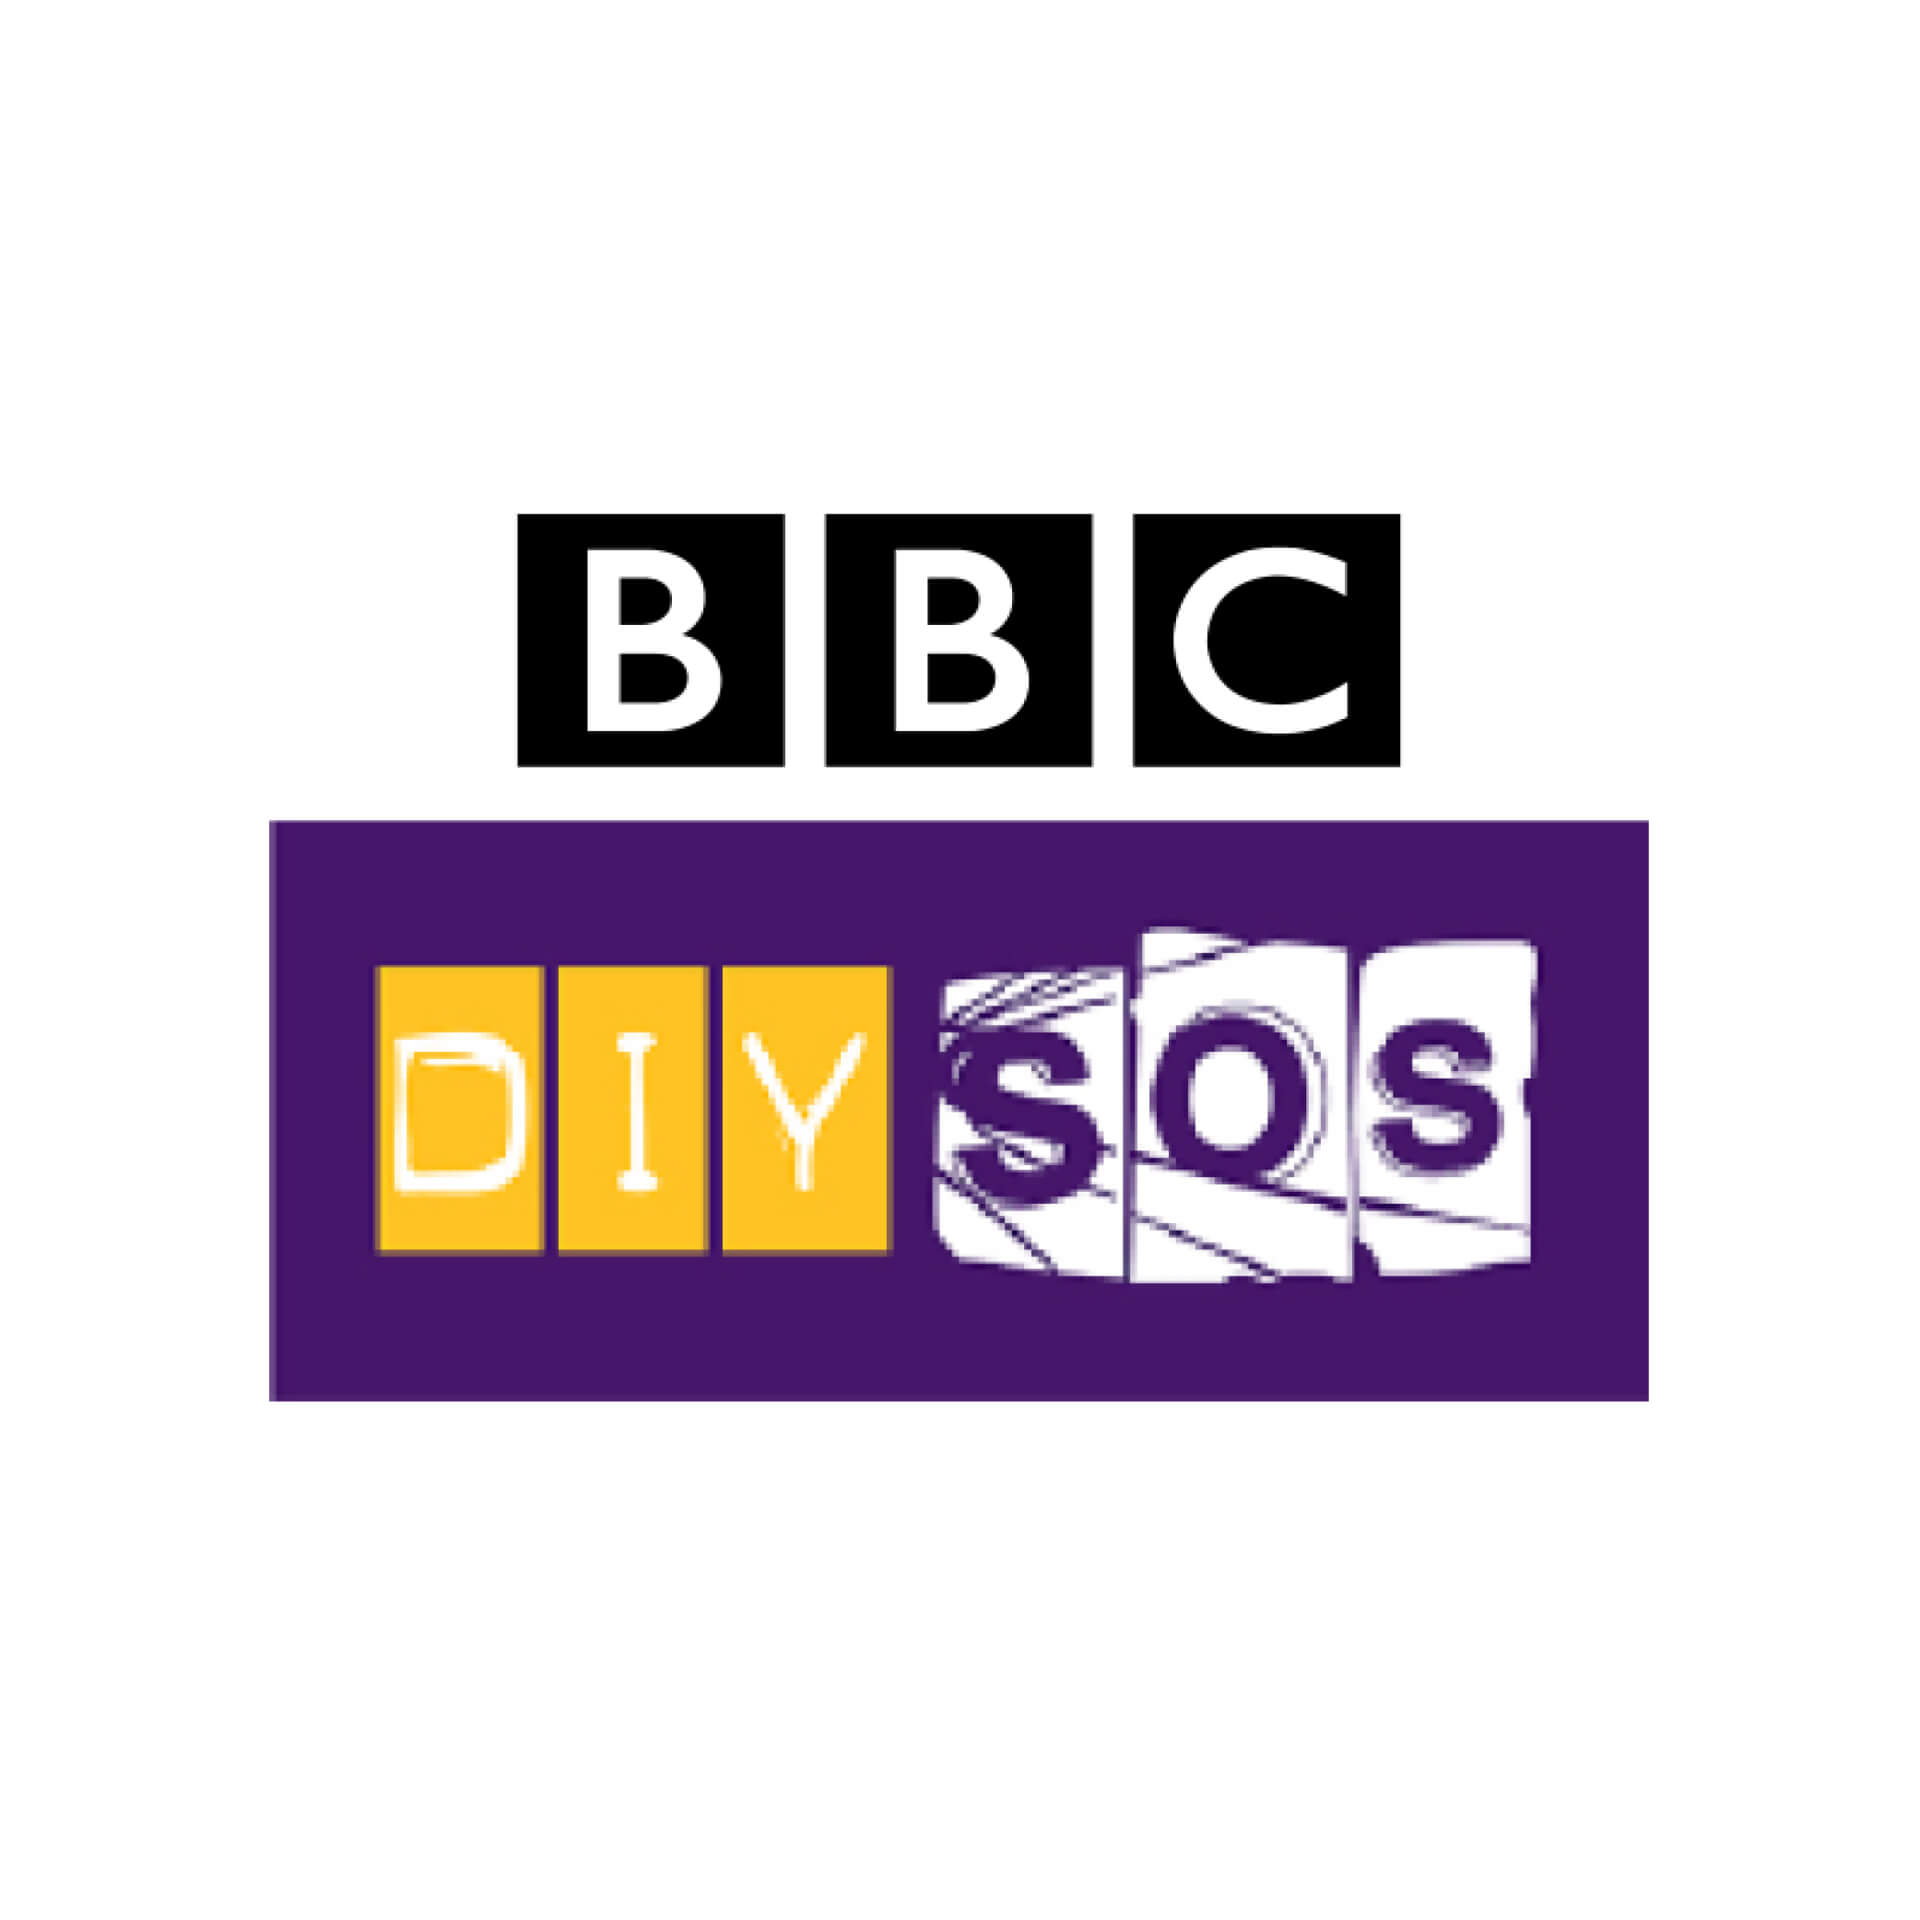 BBC DIY SOS